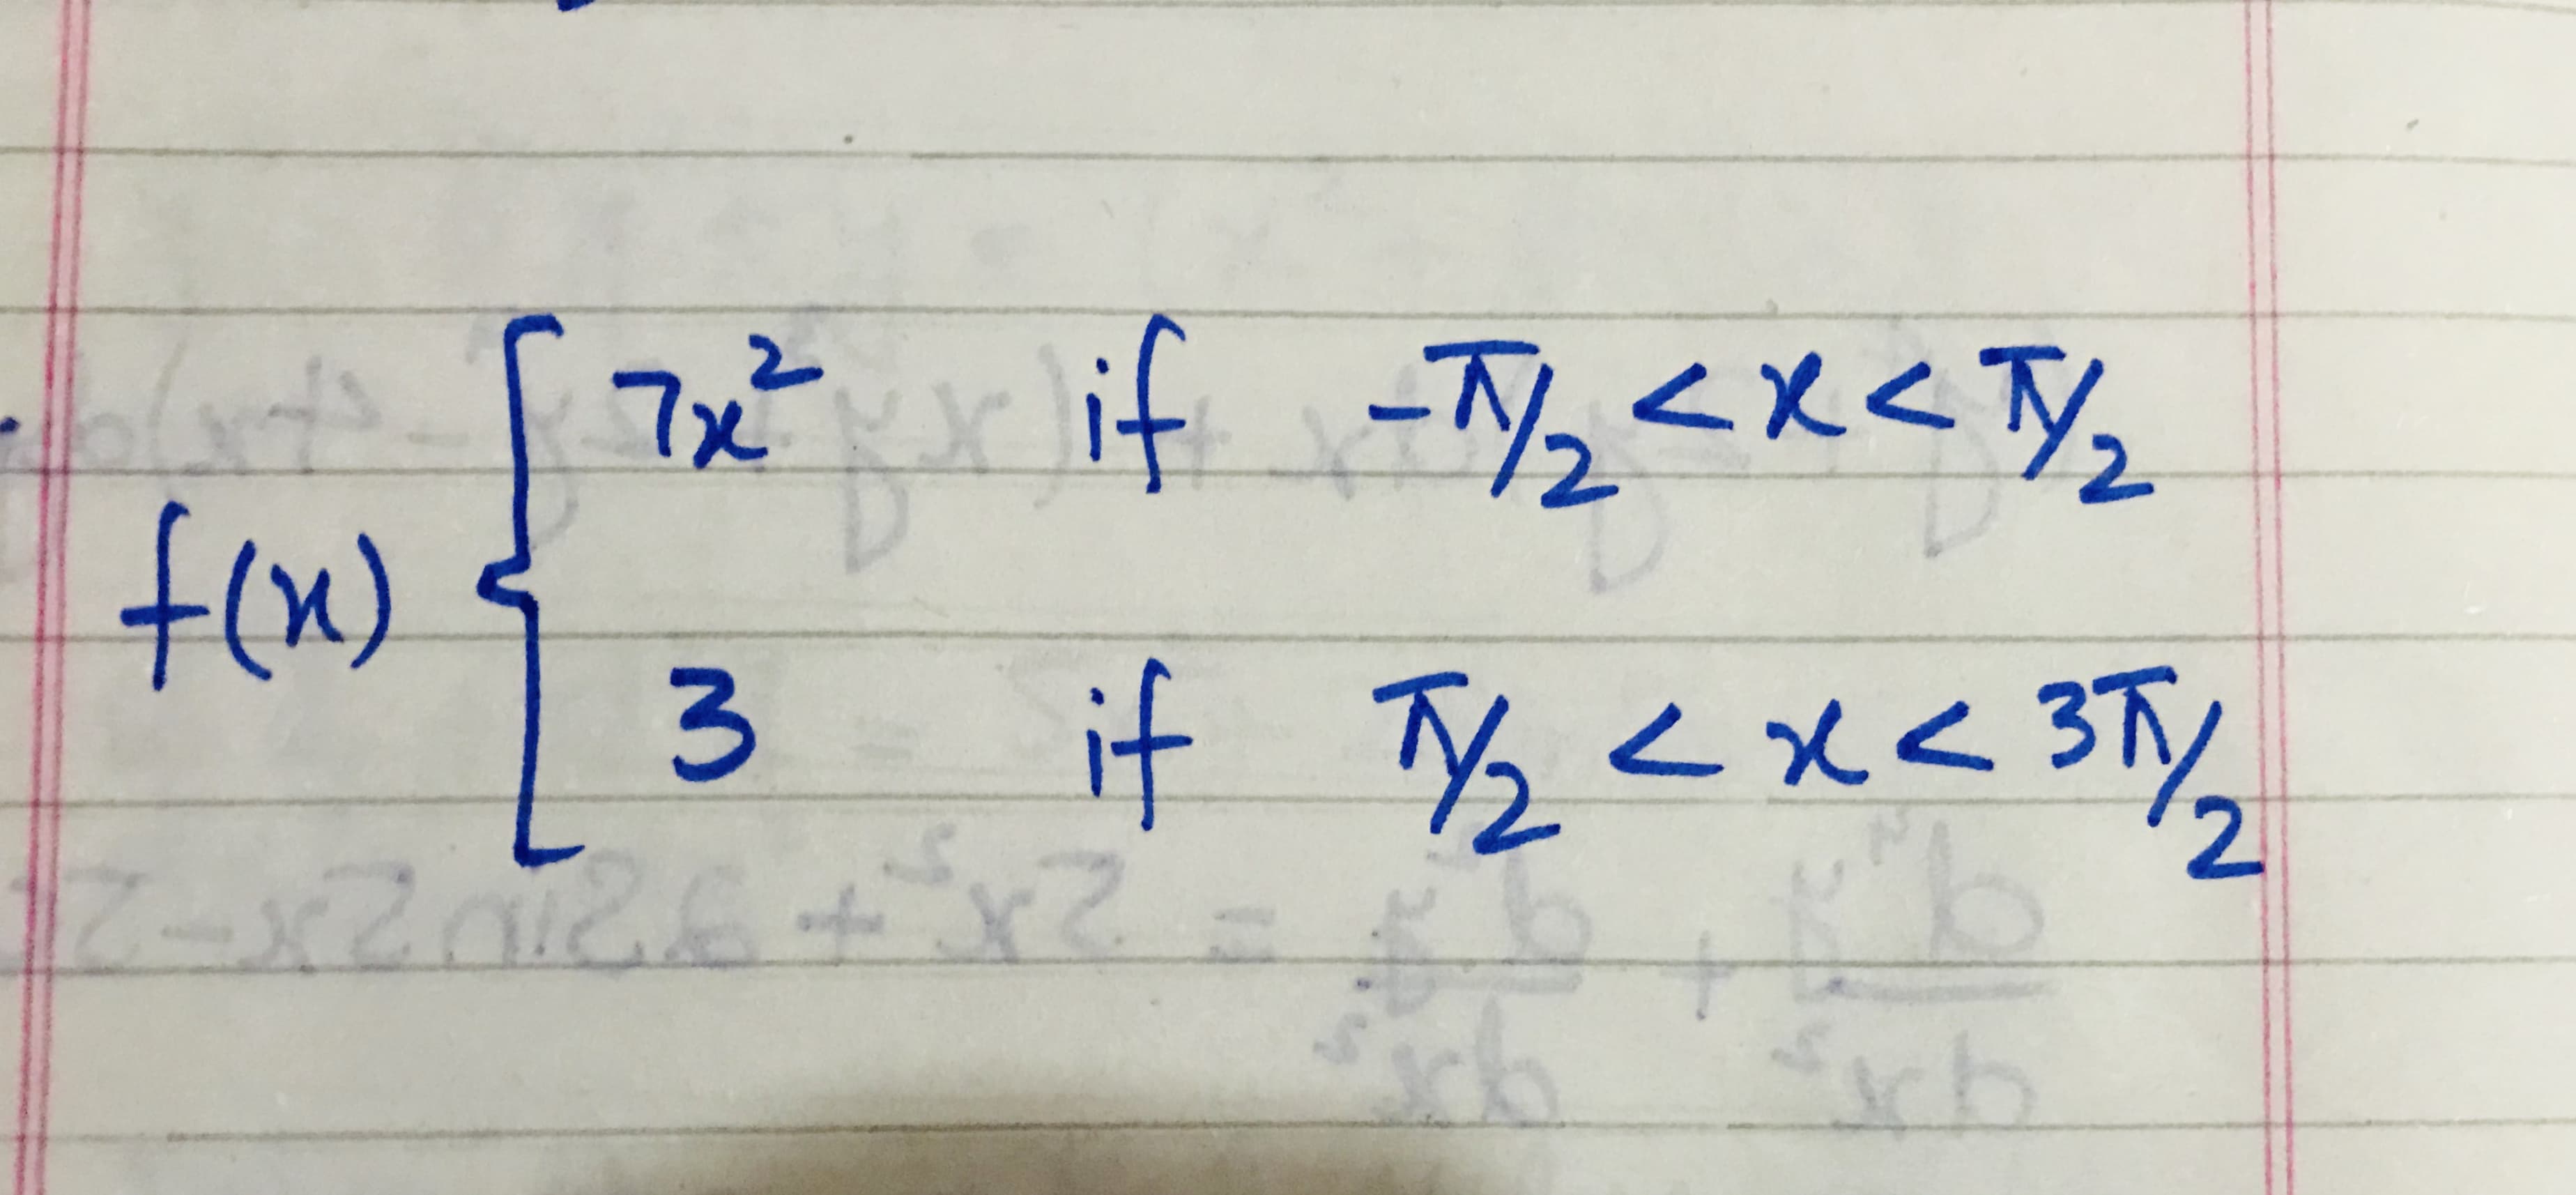 7x²
f(x)
if
弘つメンー
if
B
<x< 37
3.
